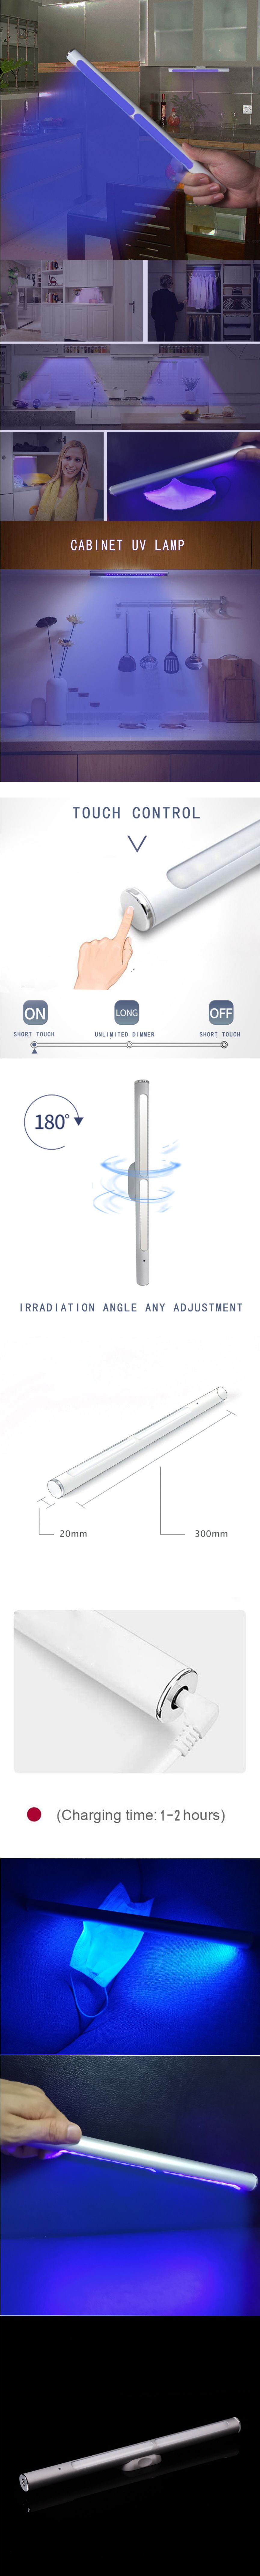 XANESreg-Portable-Ultraviolet-UV-Sterilizer-Light-Tube-Waterproof-Disinfection-Bactericidal-Lamp-Bul-1668684